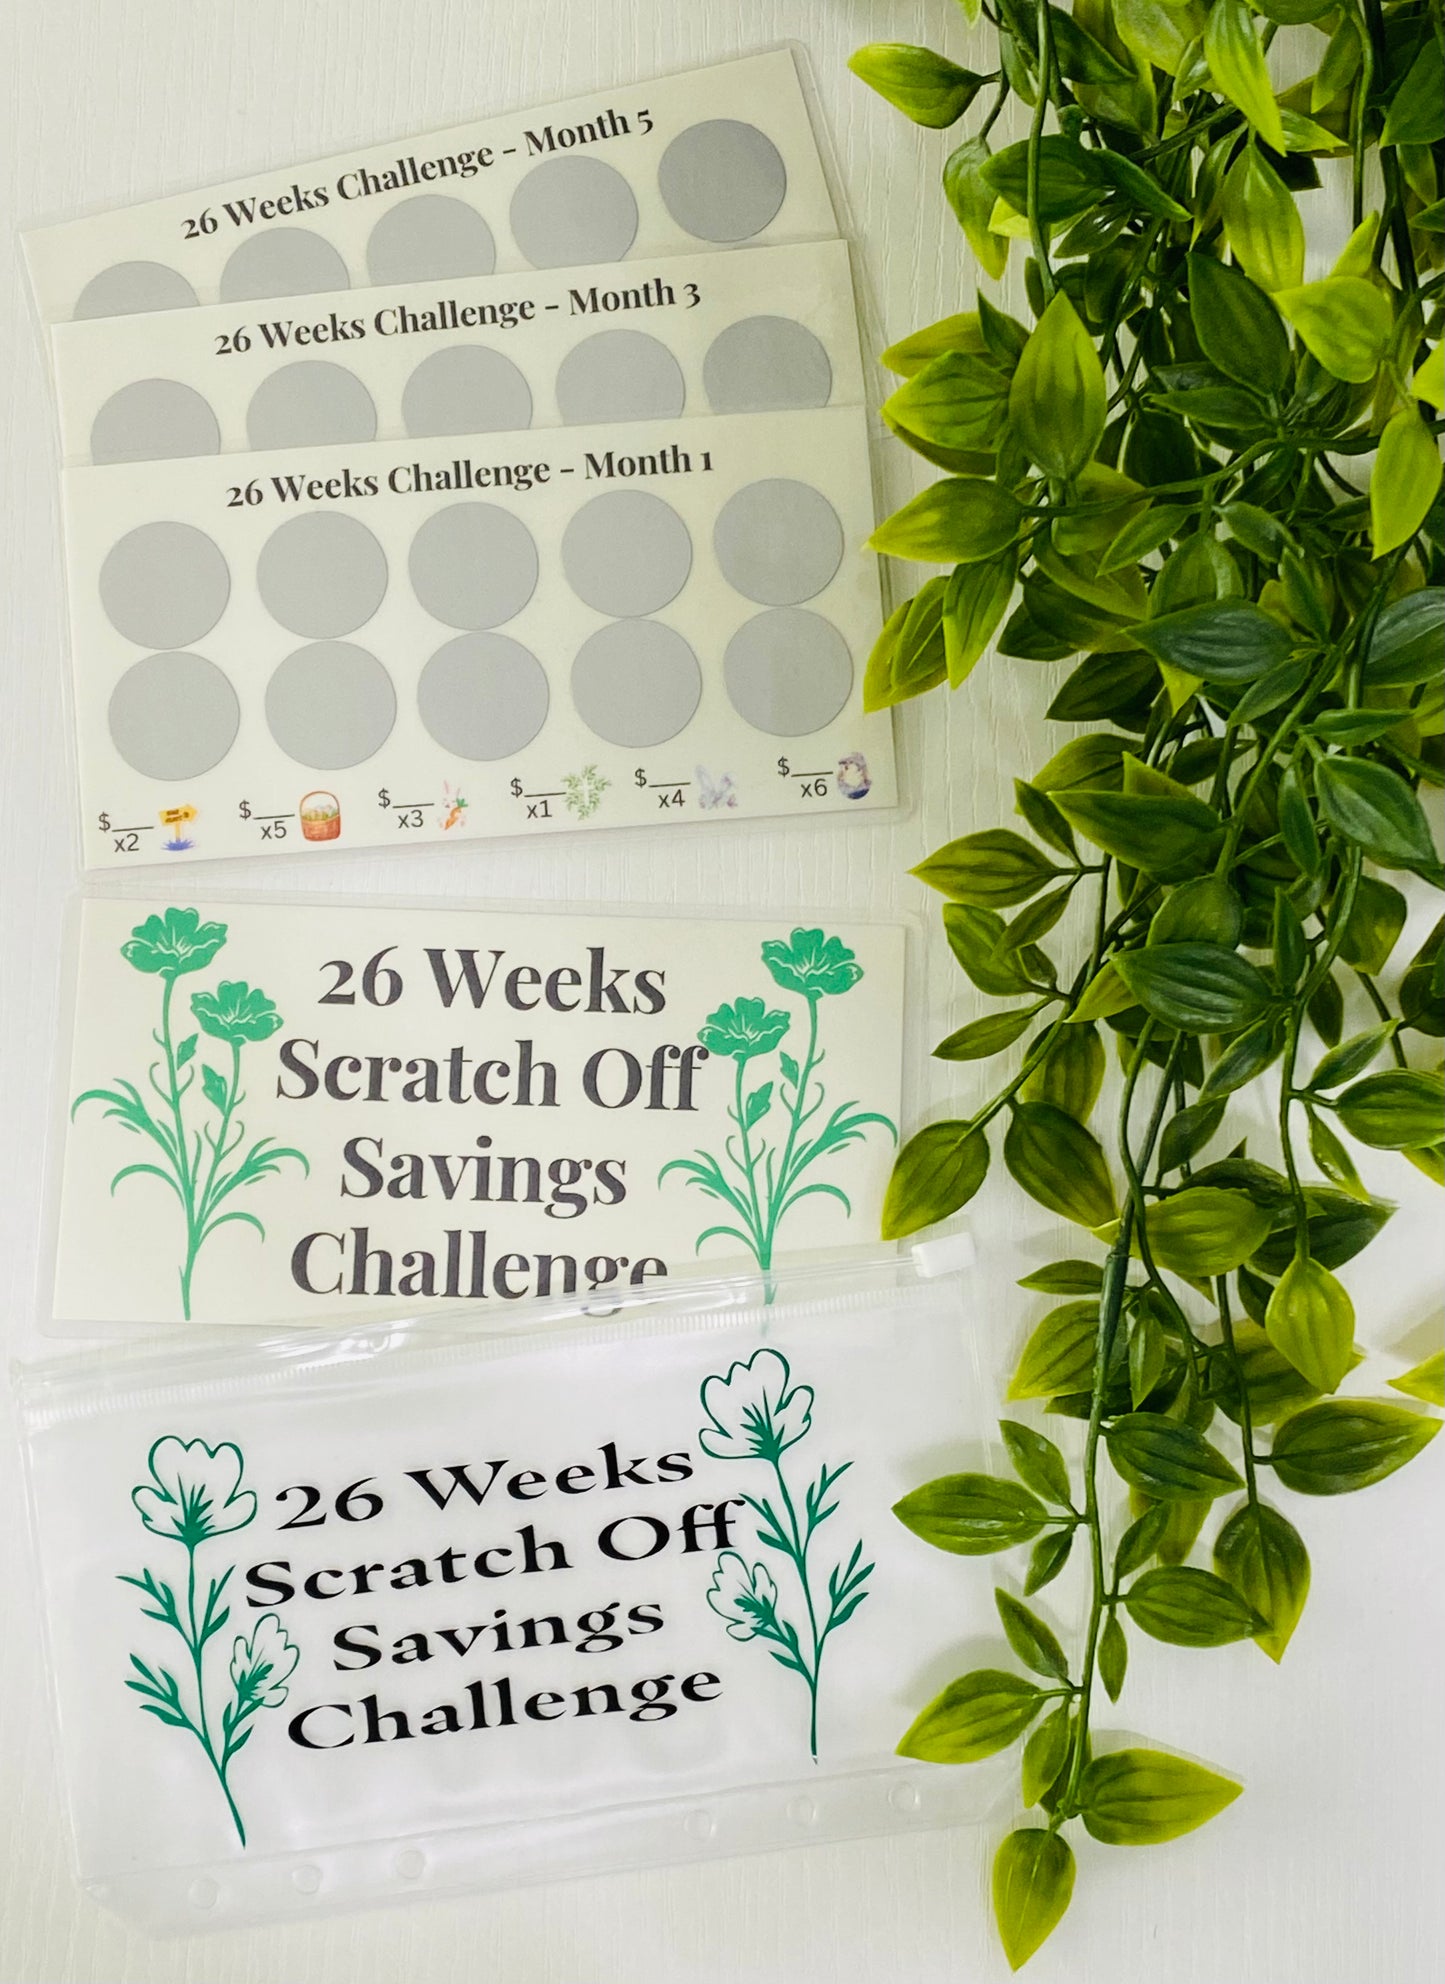 26 Weeks Scratch Off Savings Challenge